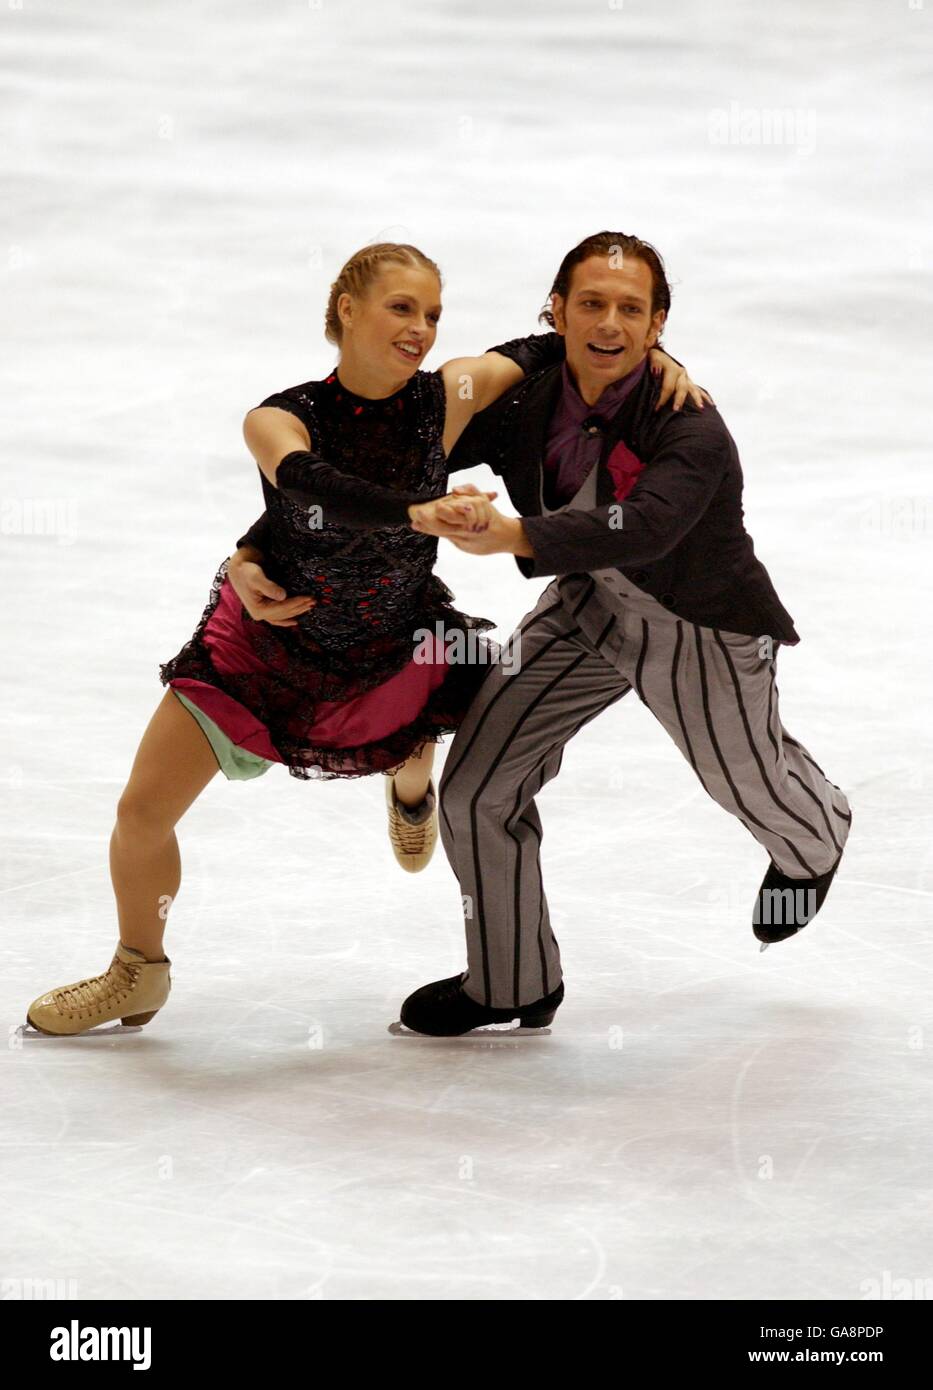 Winter Olympics - Salt Lake City 2002 - Figure Skating - Ice Dancing - Free Dance Stock Photo